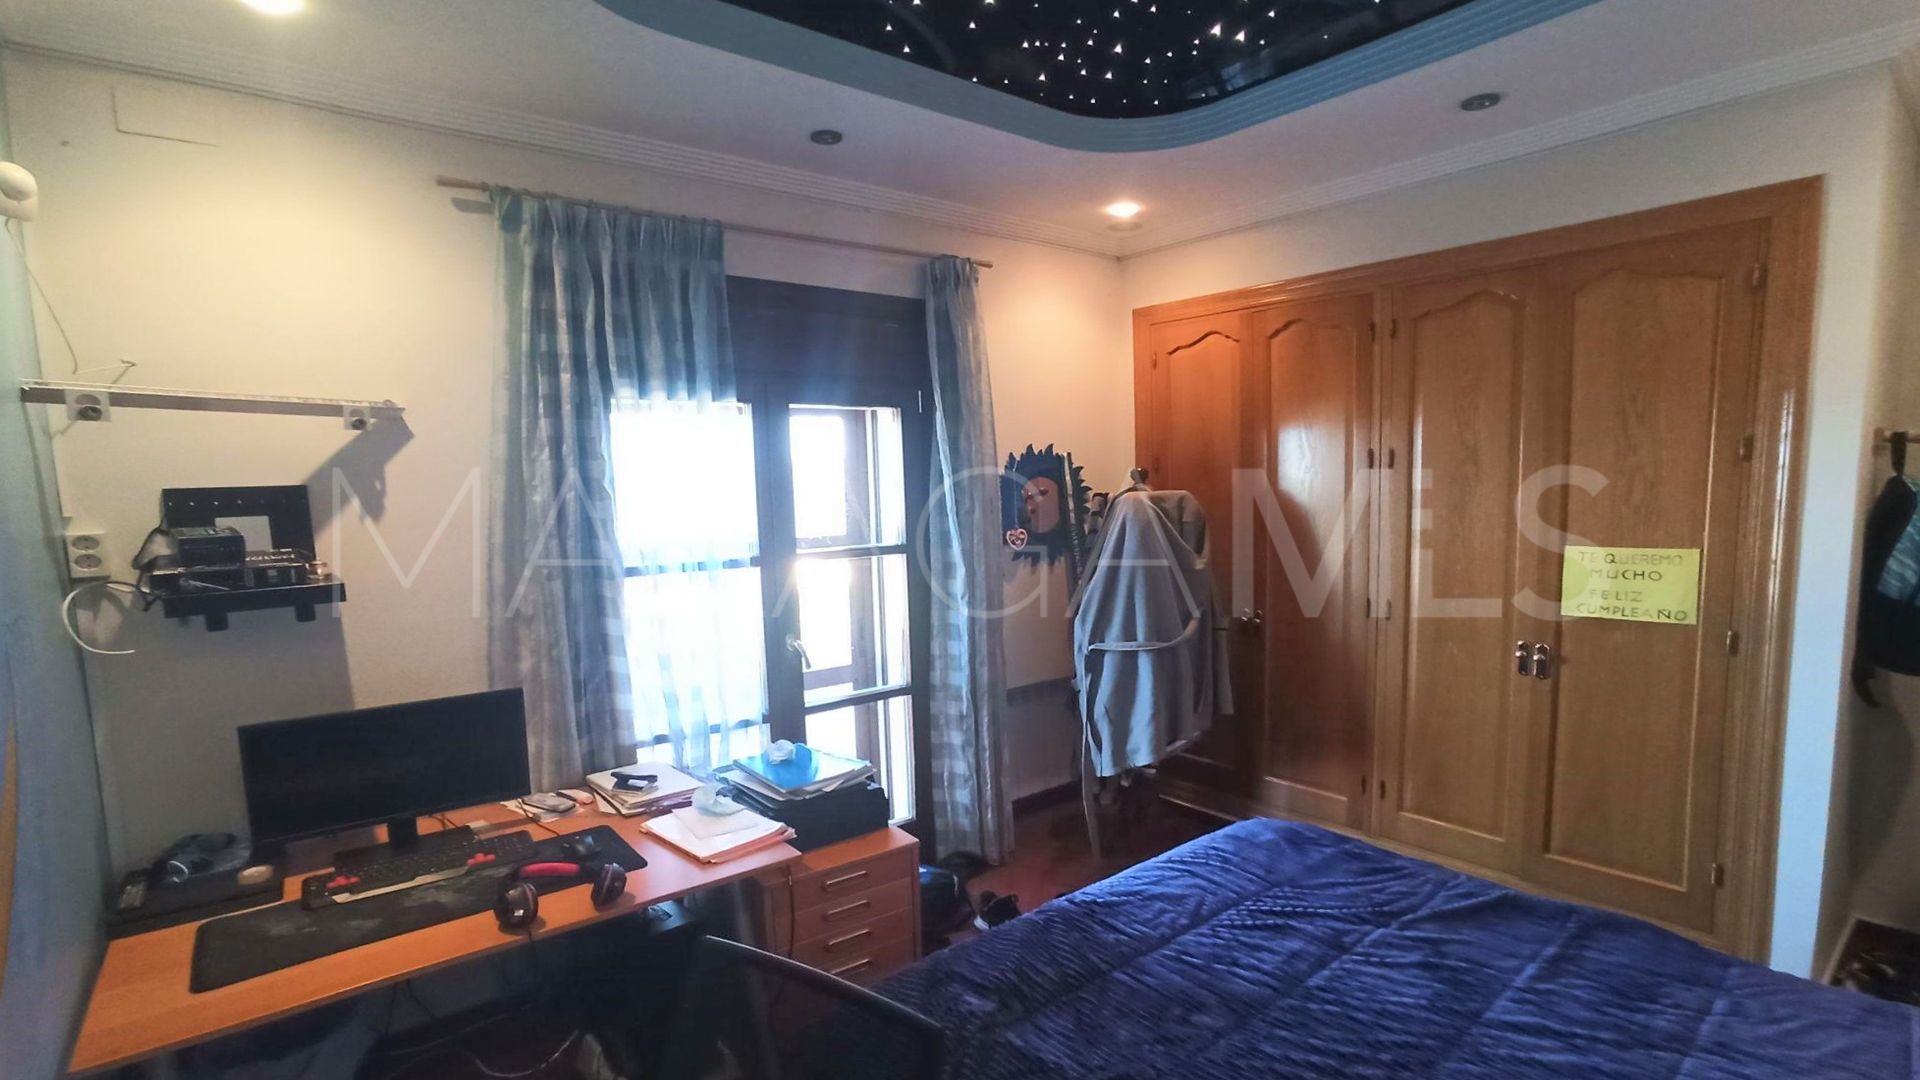 4 bedrooms villa in Manilva for sale